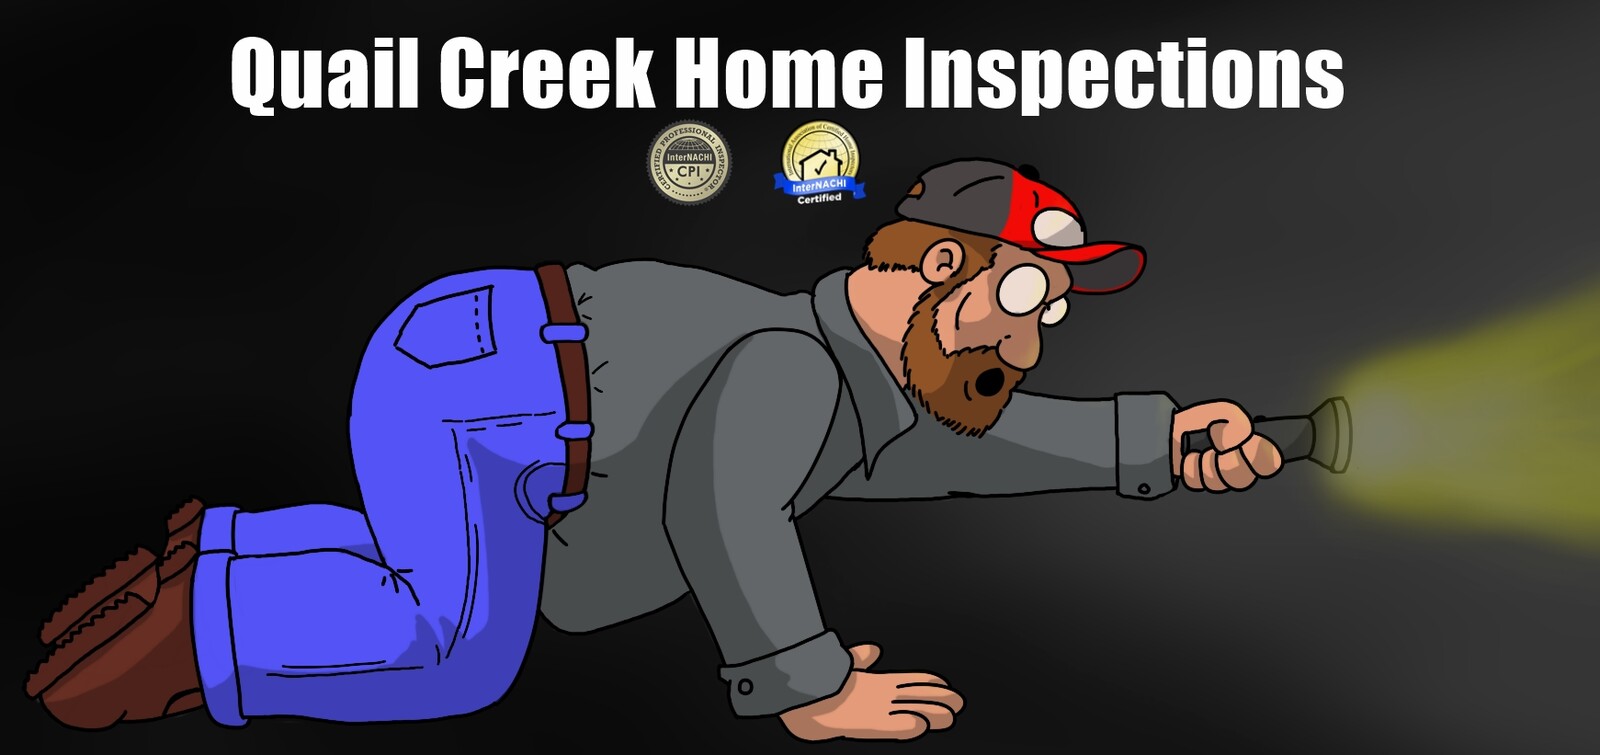 Quail Creek Home Inspections, marketing illustrations